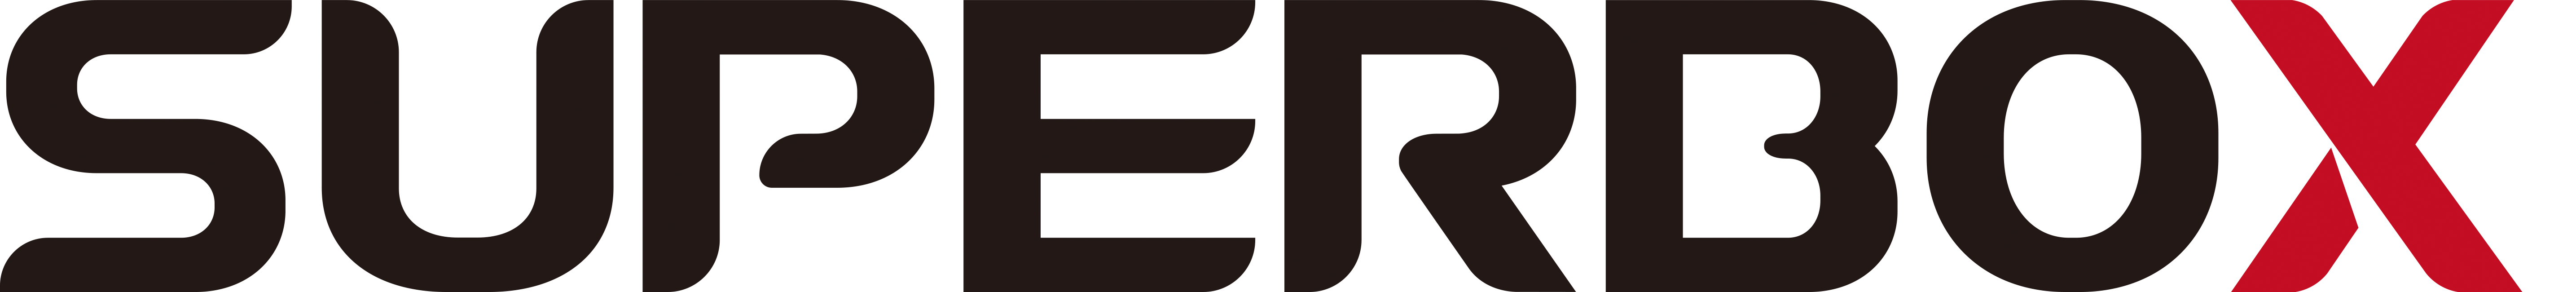 superbox logo